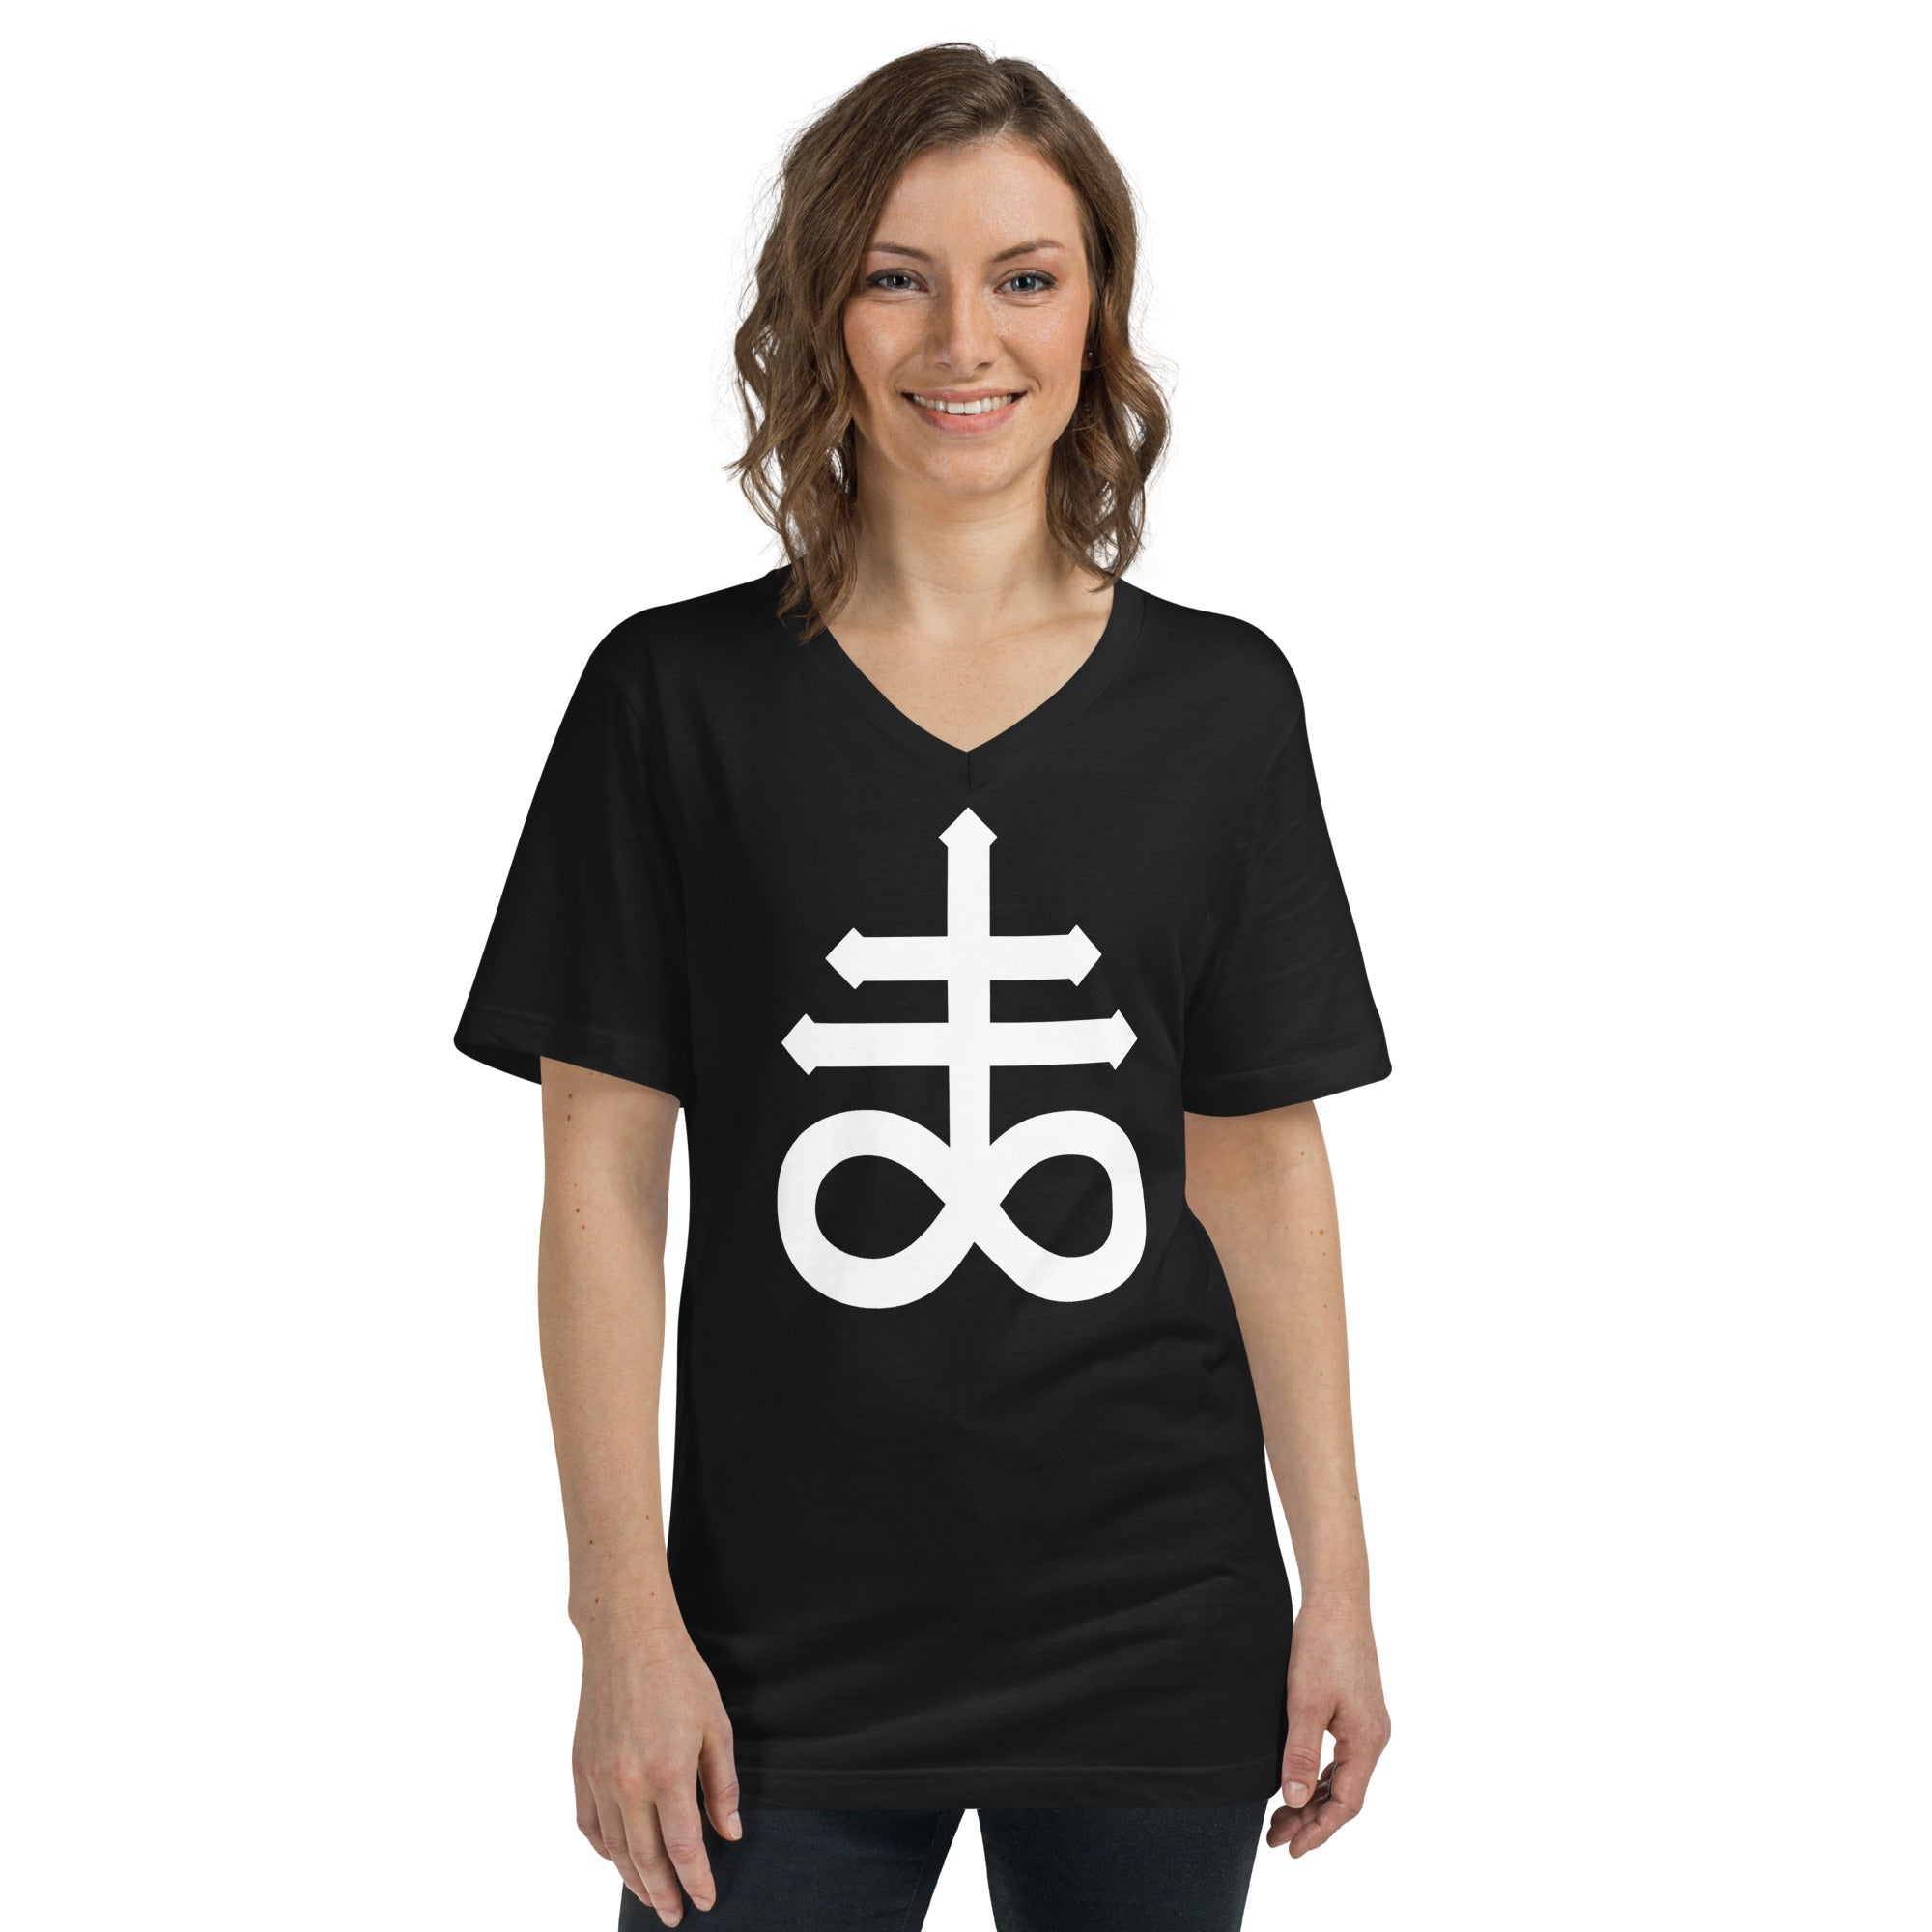 The Leviathan Cross of Satan Occult Symbol Women’s  Short Sleeve V-Neck T-Shirt - Edge of Life Designs